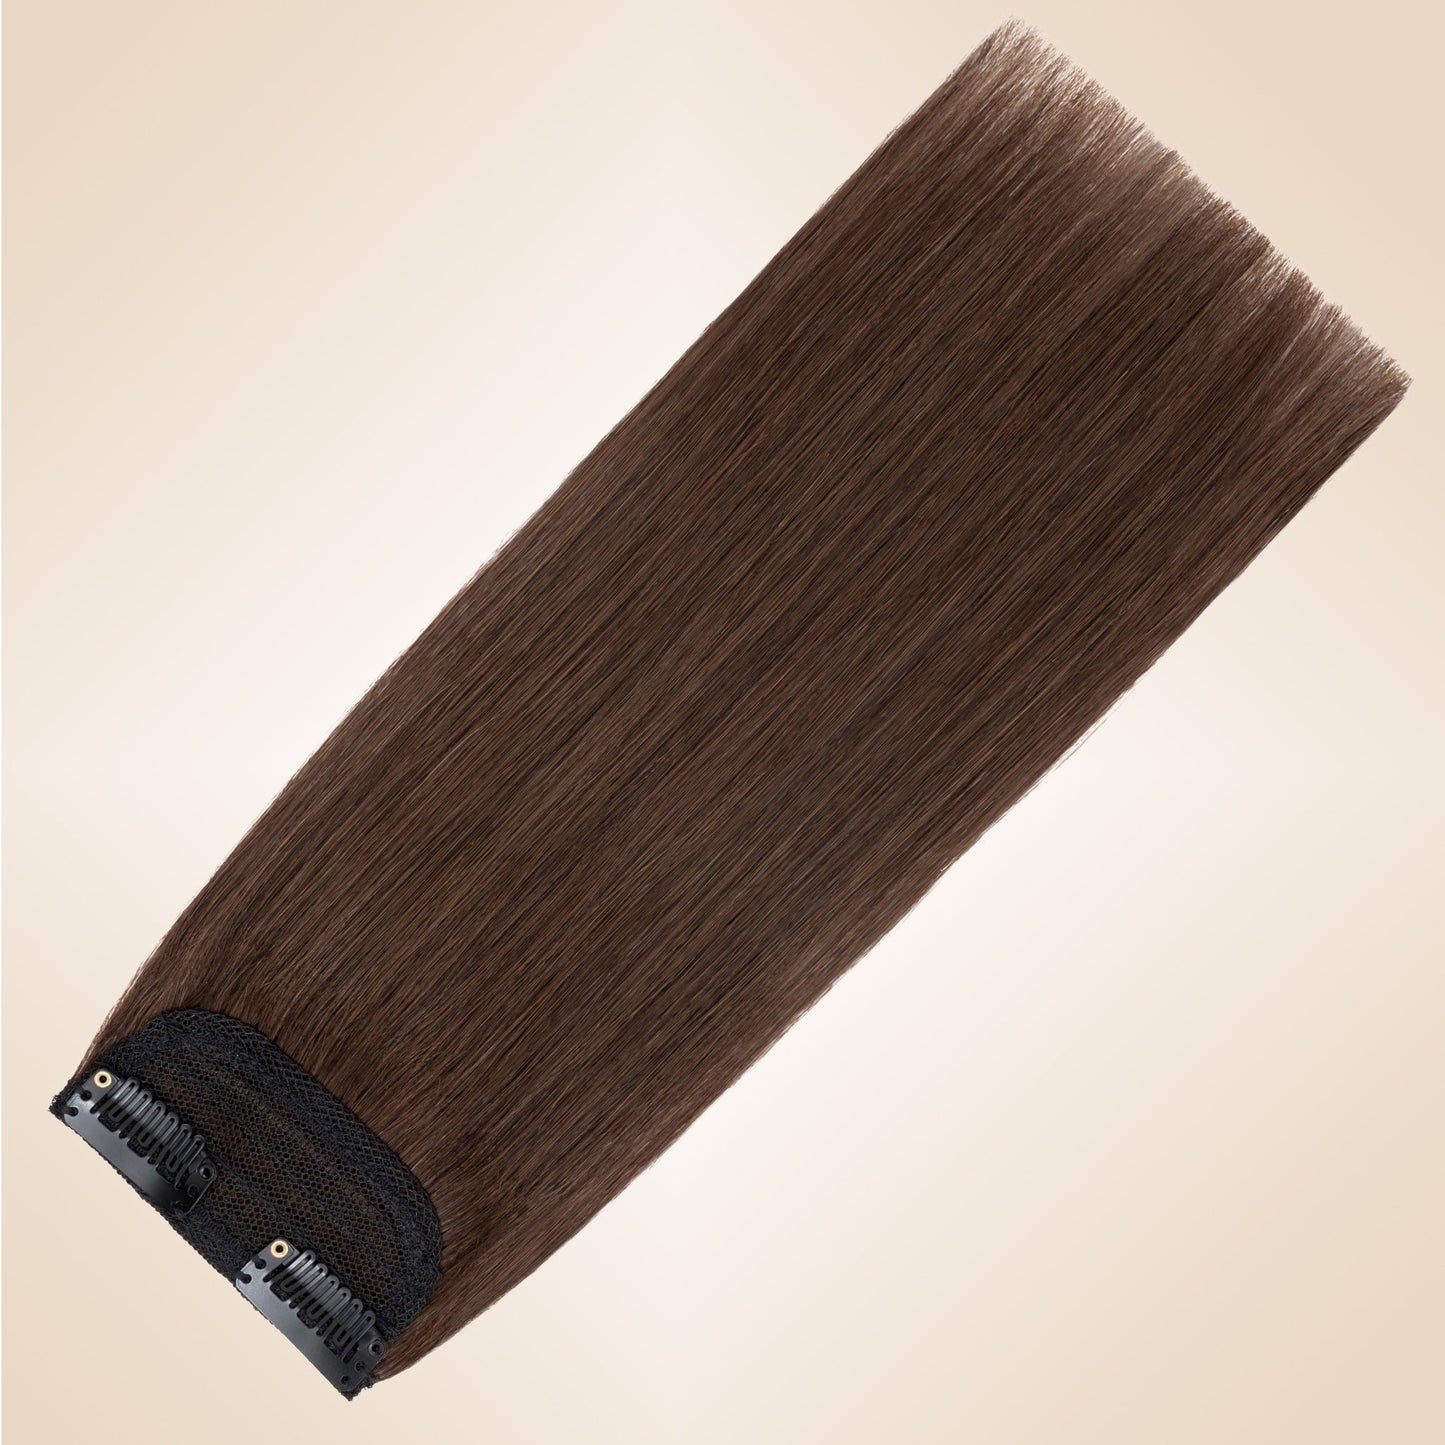 Medium Brown Thinning Hair Fill-Ins segohair.com